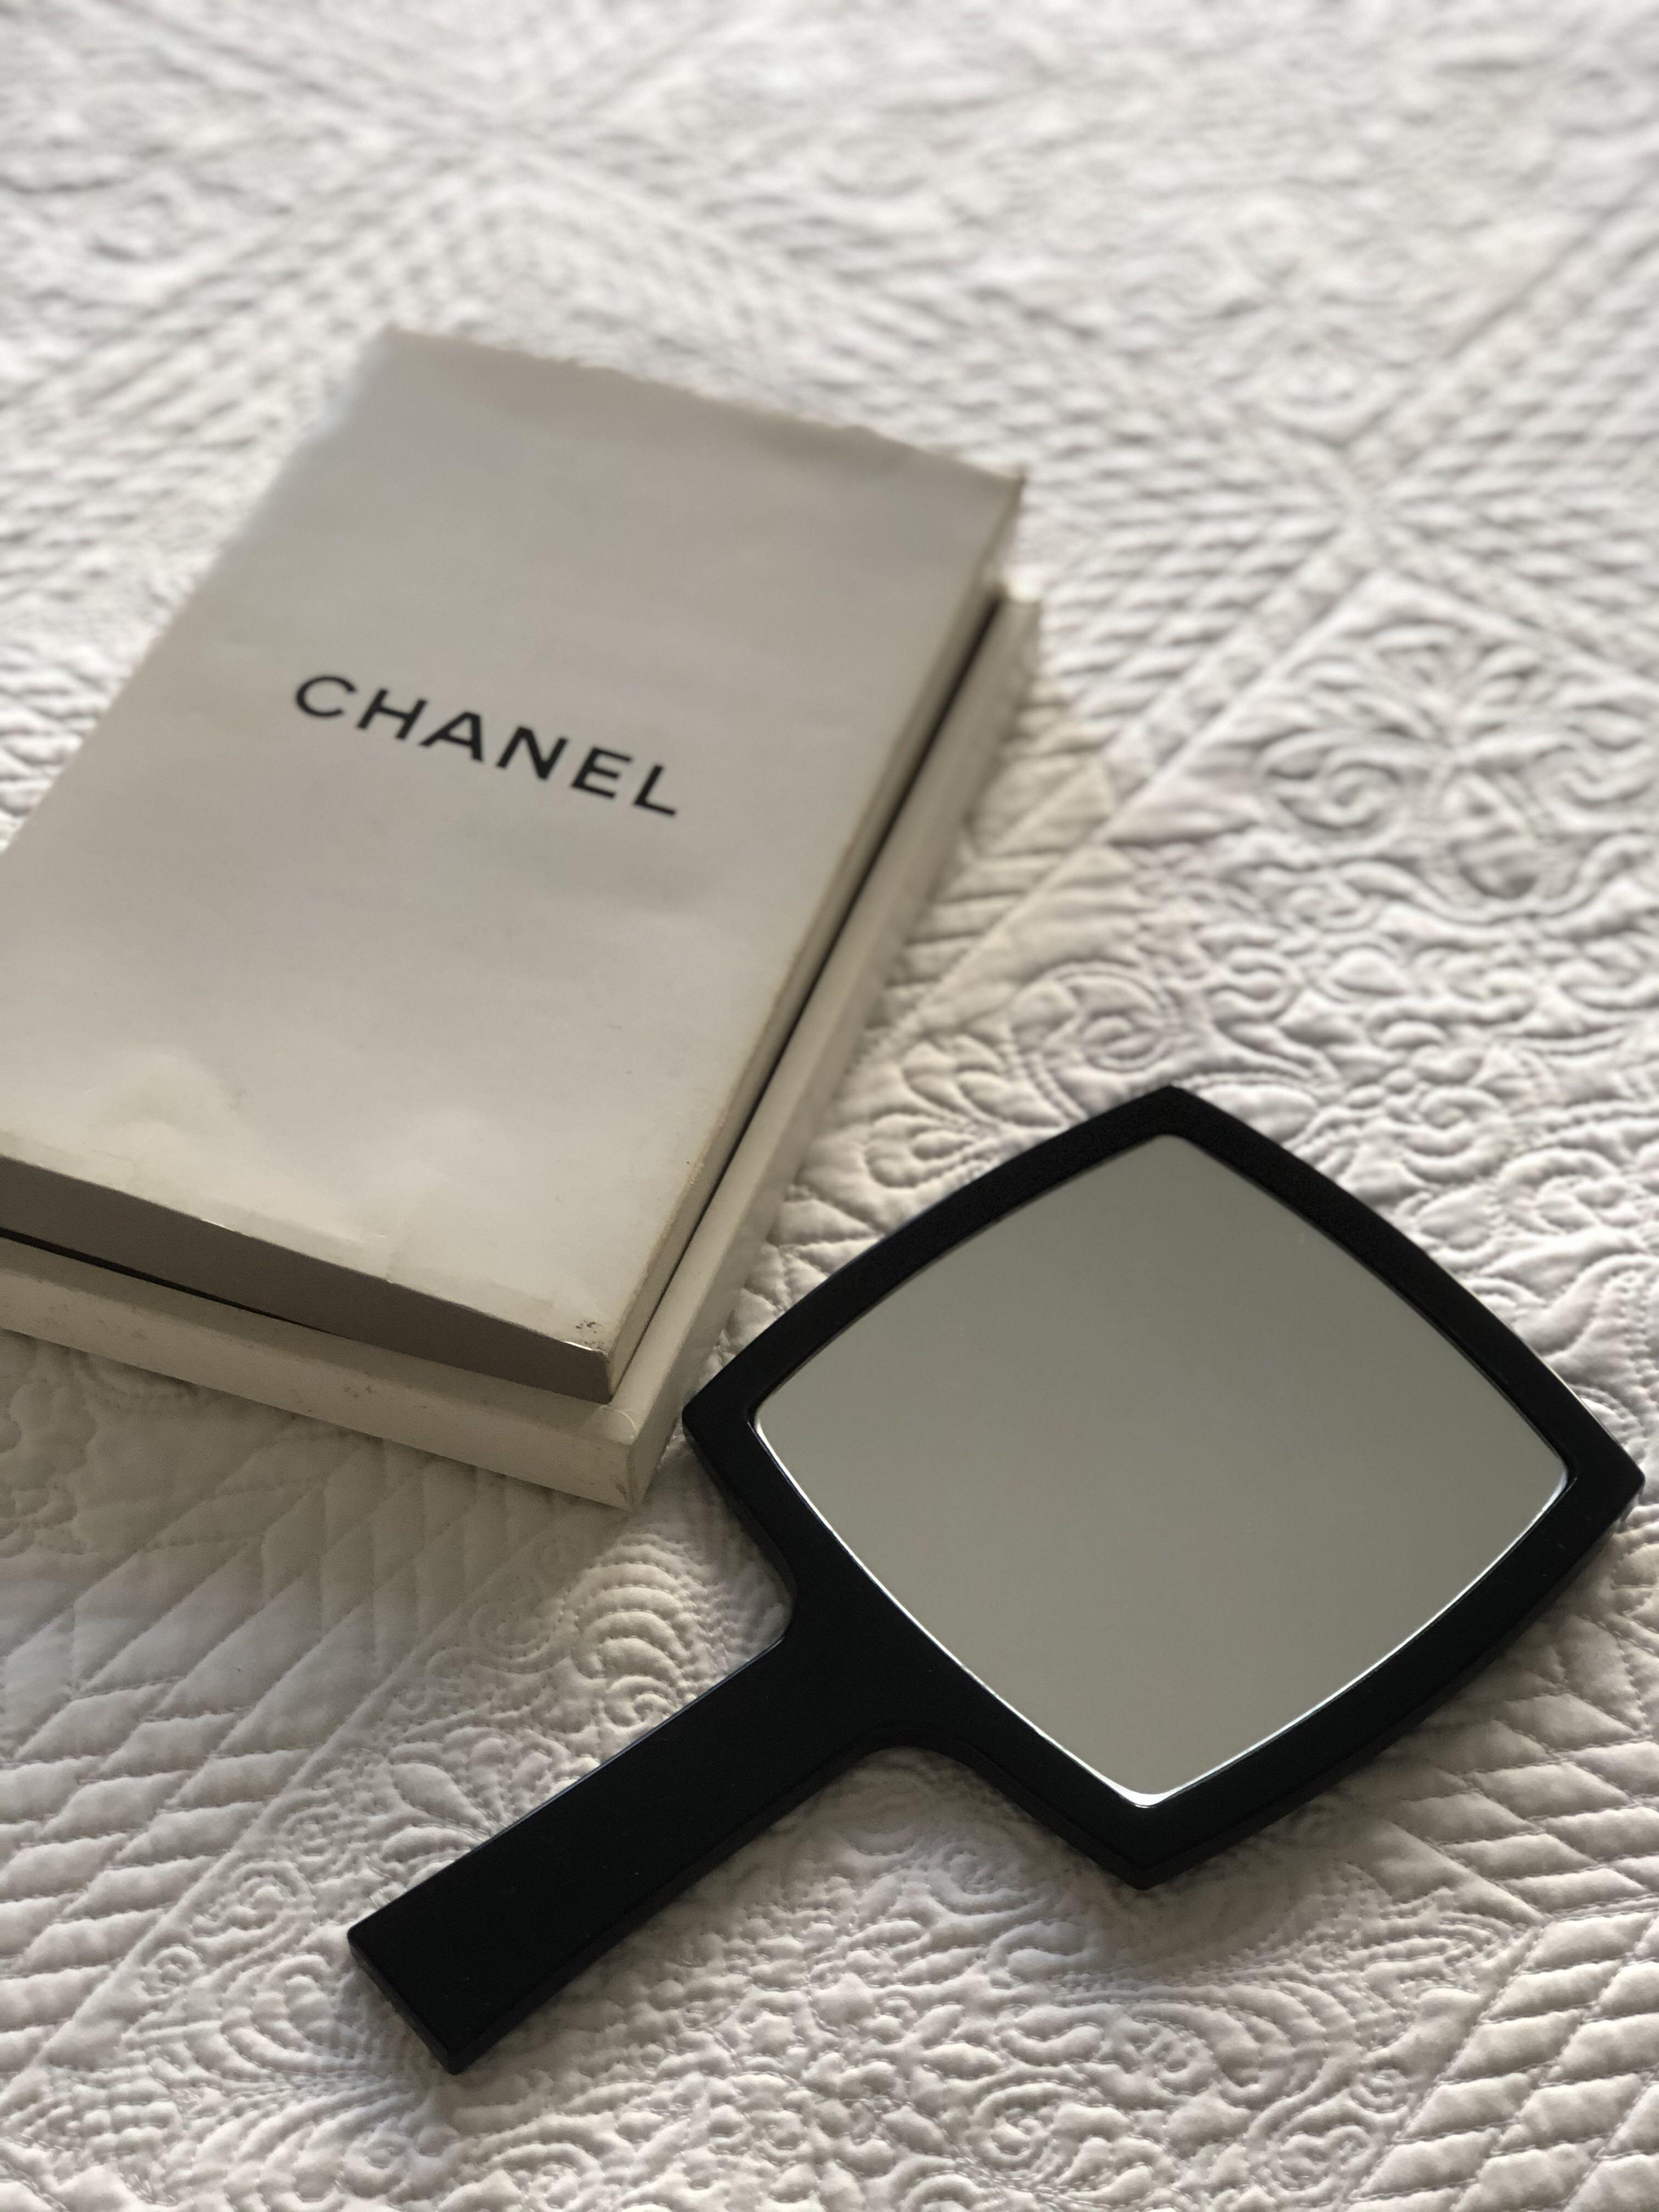 Brand New Chanel handheld mirror